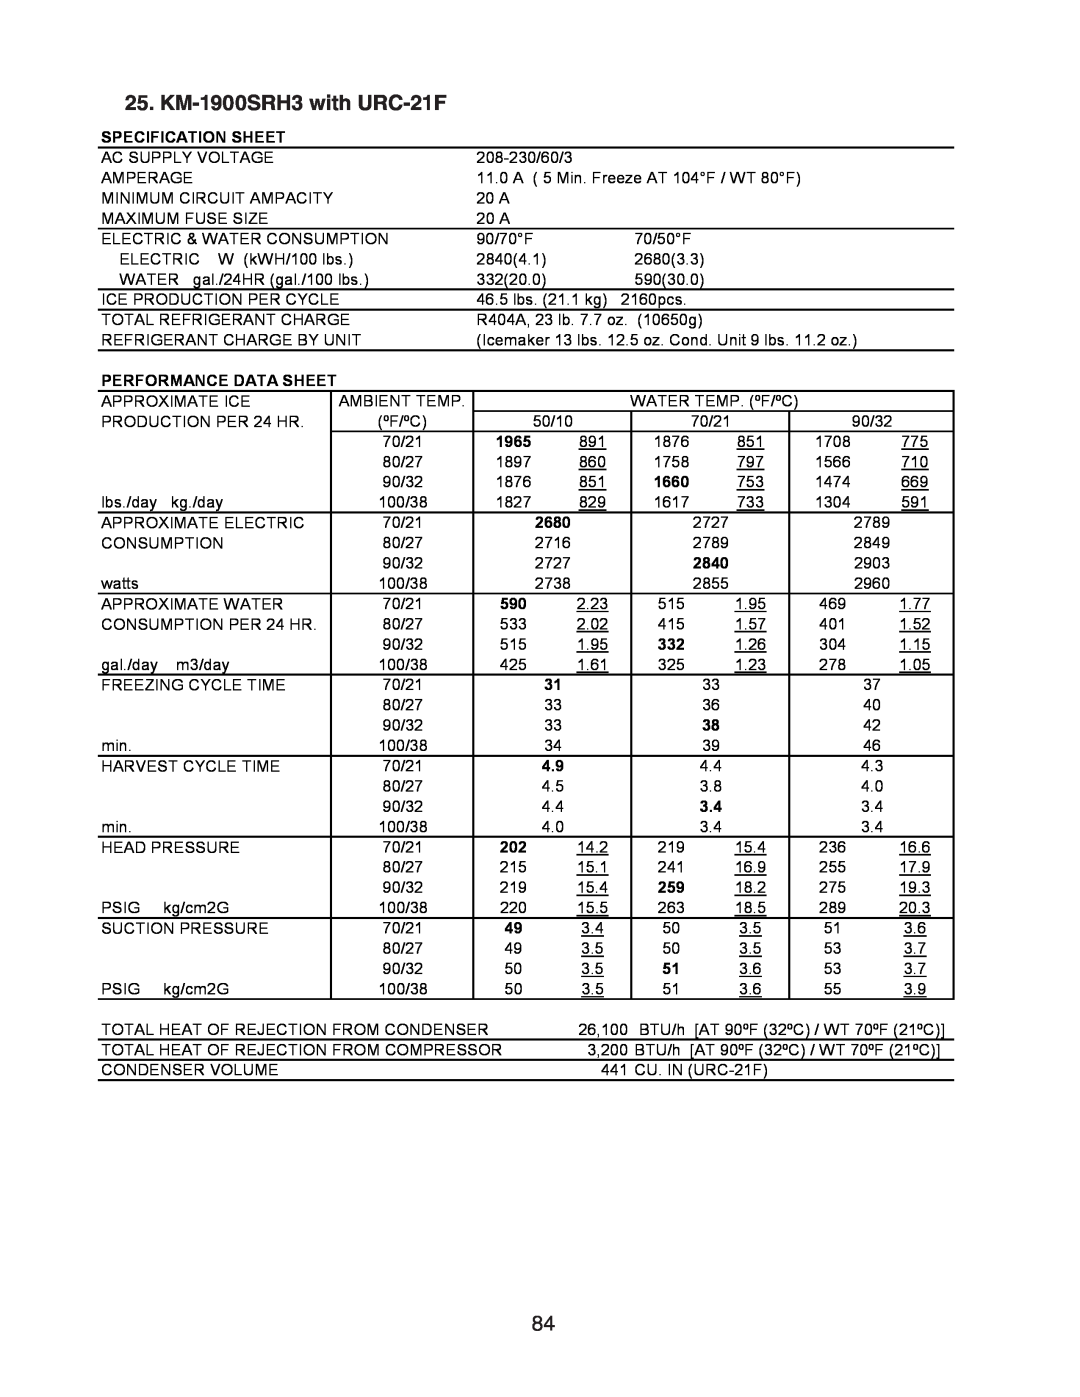 Hoshizaki SWH3-M KM-1601SAH/3, SRH/3 KM-1900SRH3 with URC-21F, Specification Sheet, Performance Data Sheet, 1965, 2680 